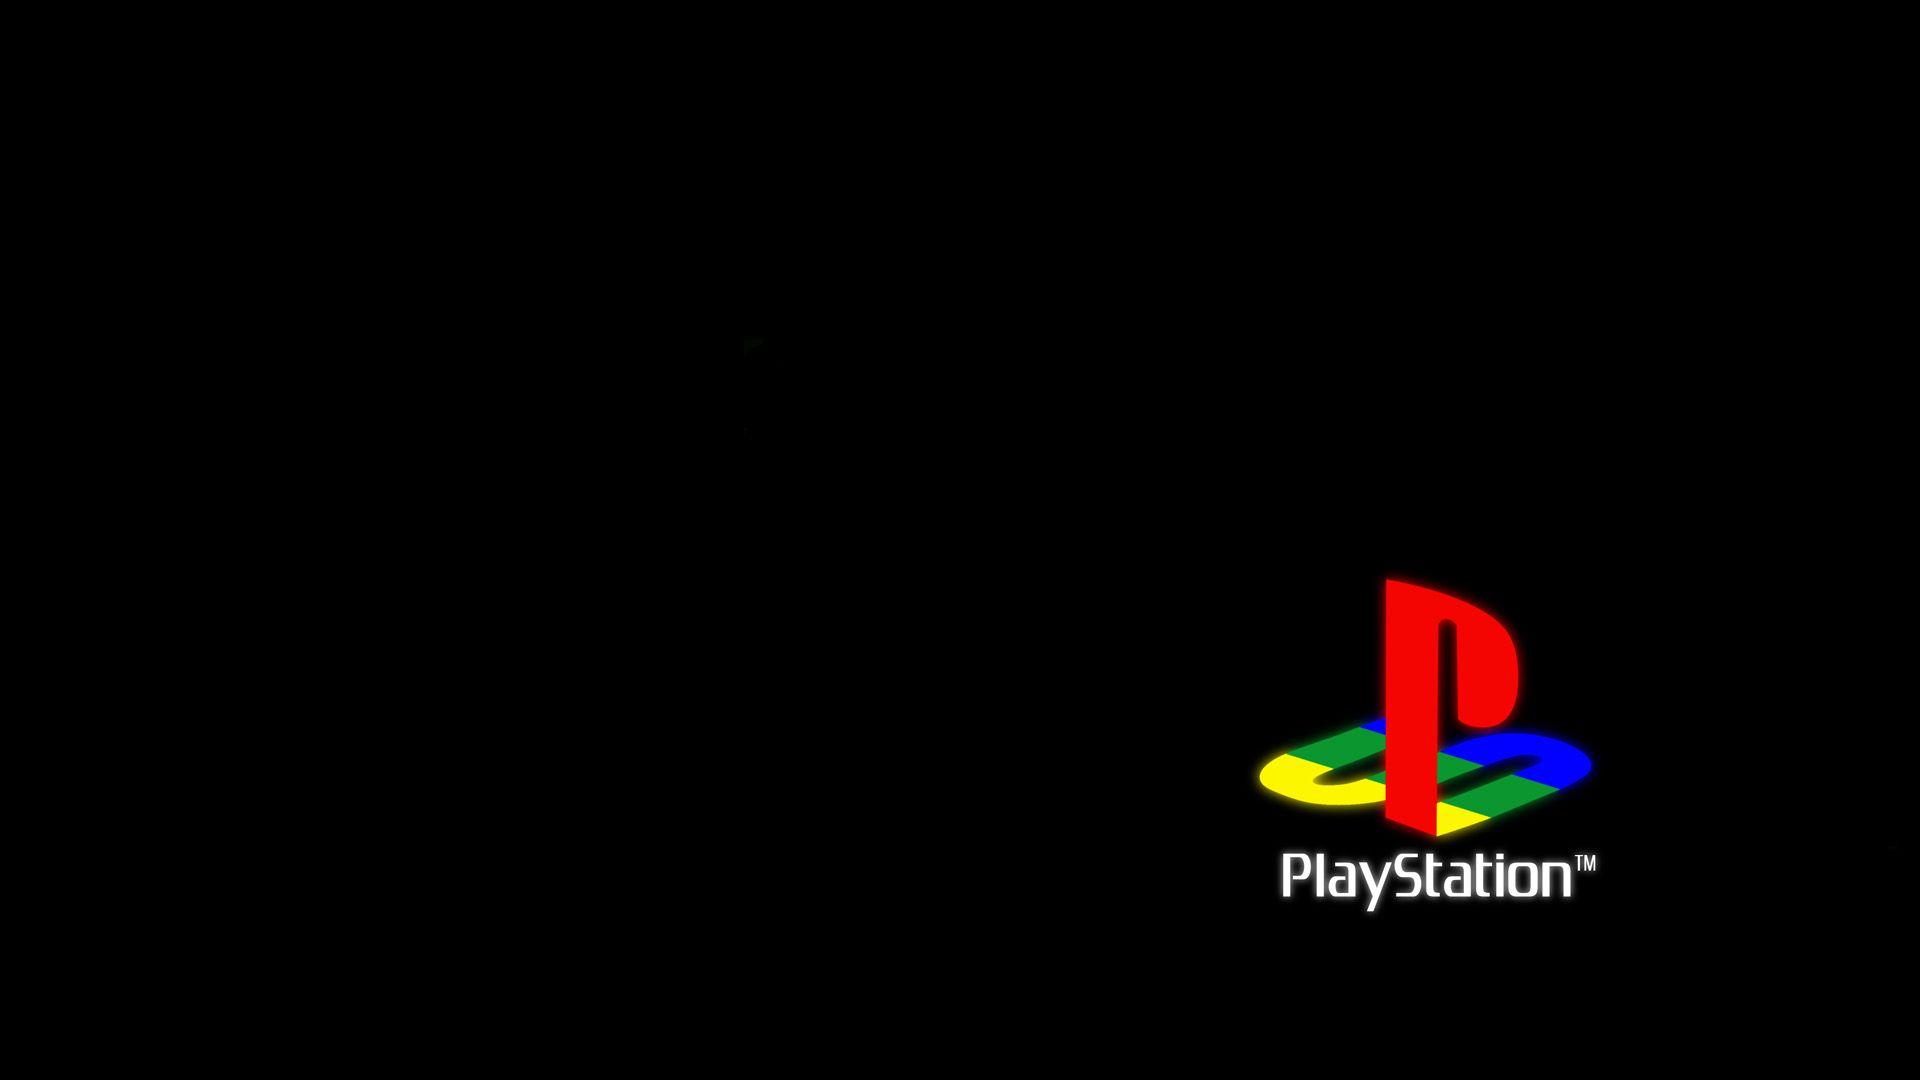 Hình nền 1920x1080 PS1.  Hình nền PS1 Crash Bandicoot, Hình nền Sony PS1 và Hình nền PS1 Spyro